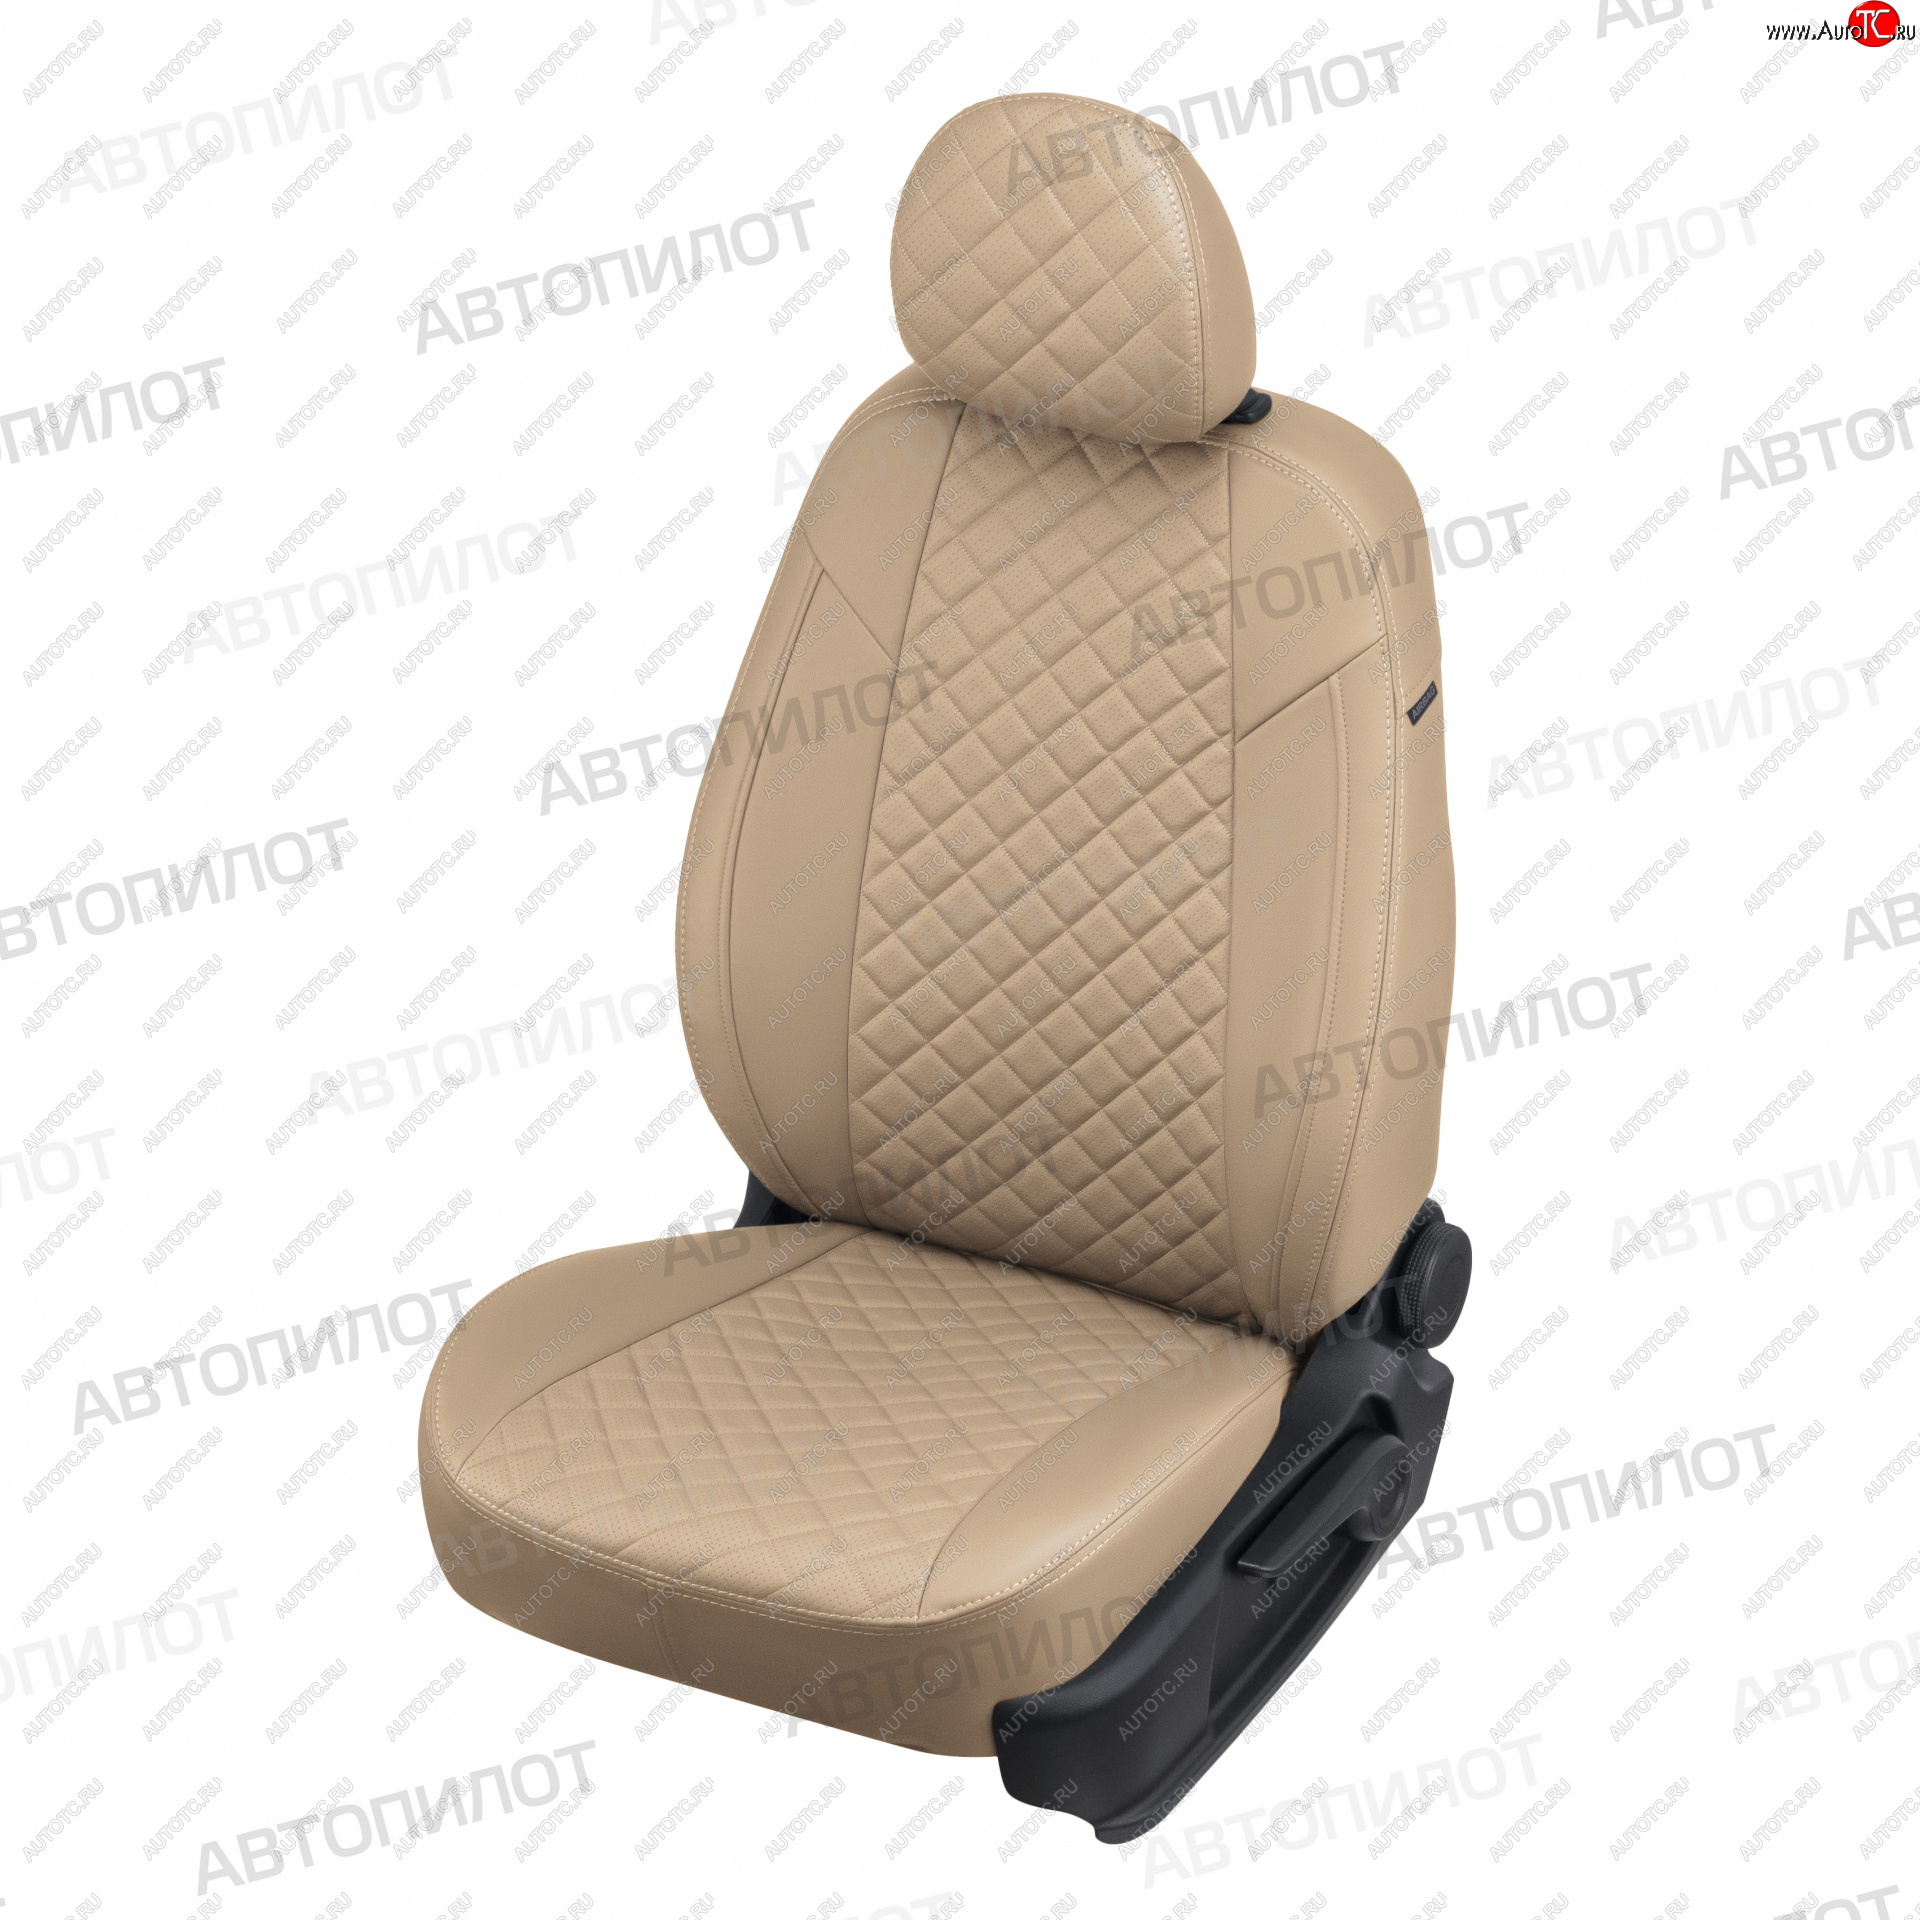 13 999 р. Чехлы сидений (экокожа) Автопилот Ромб  Ford Fiesta  6 (2008-2019) (темно-бежевый)